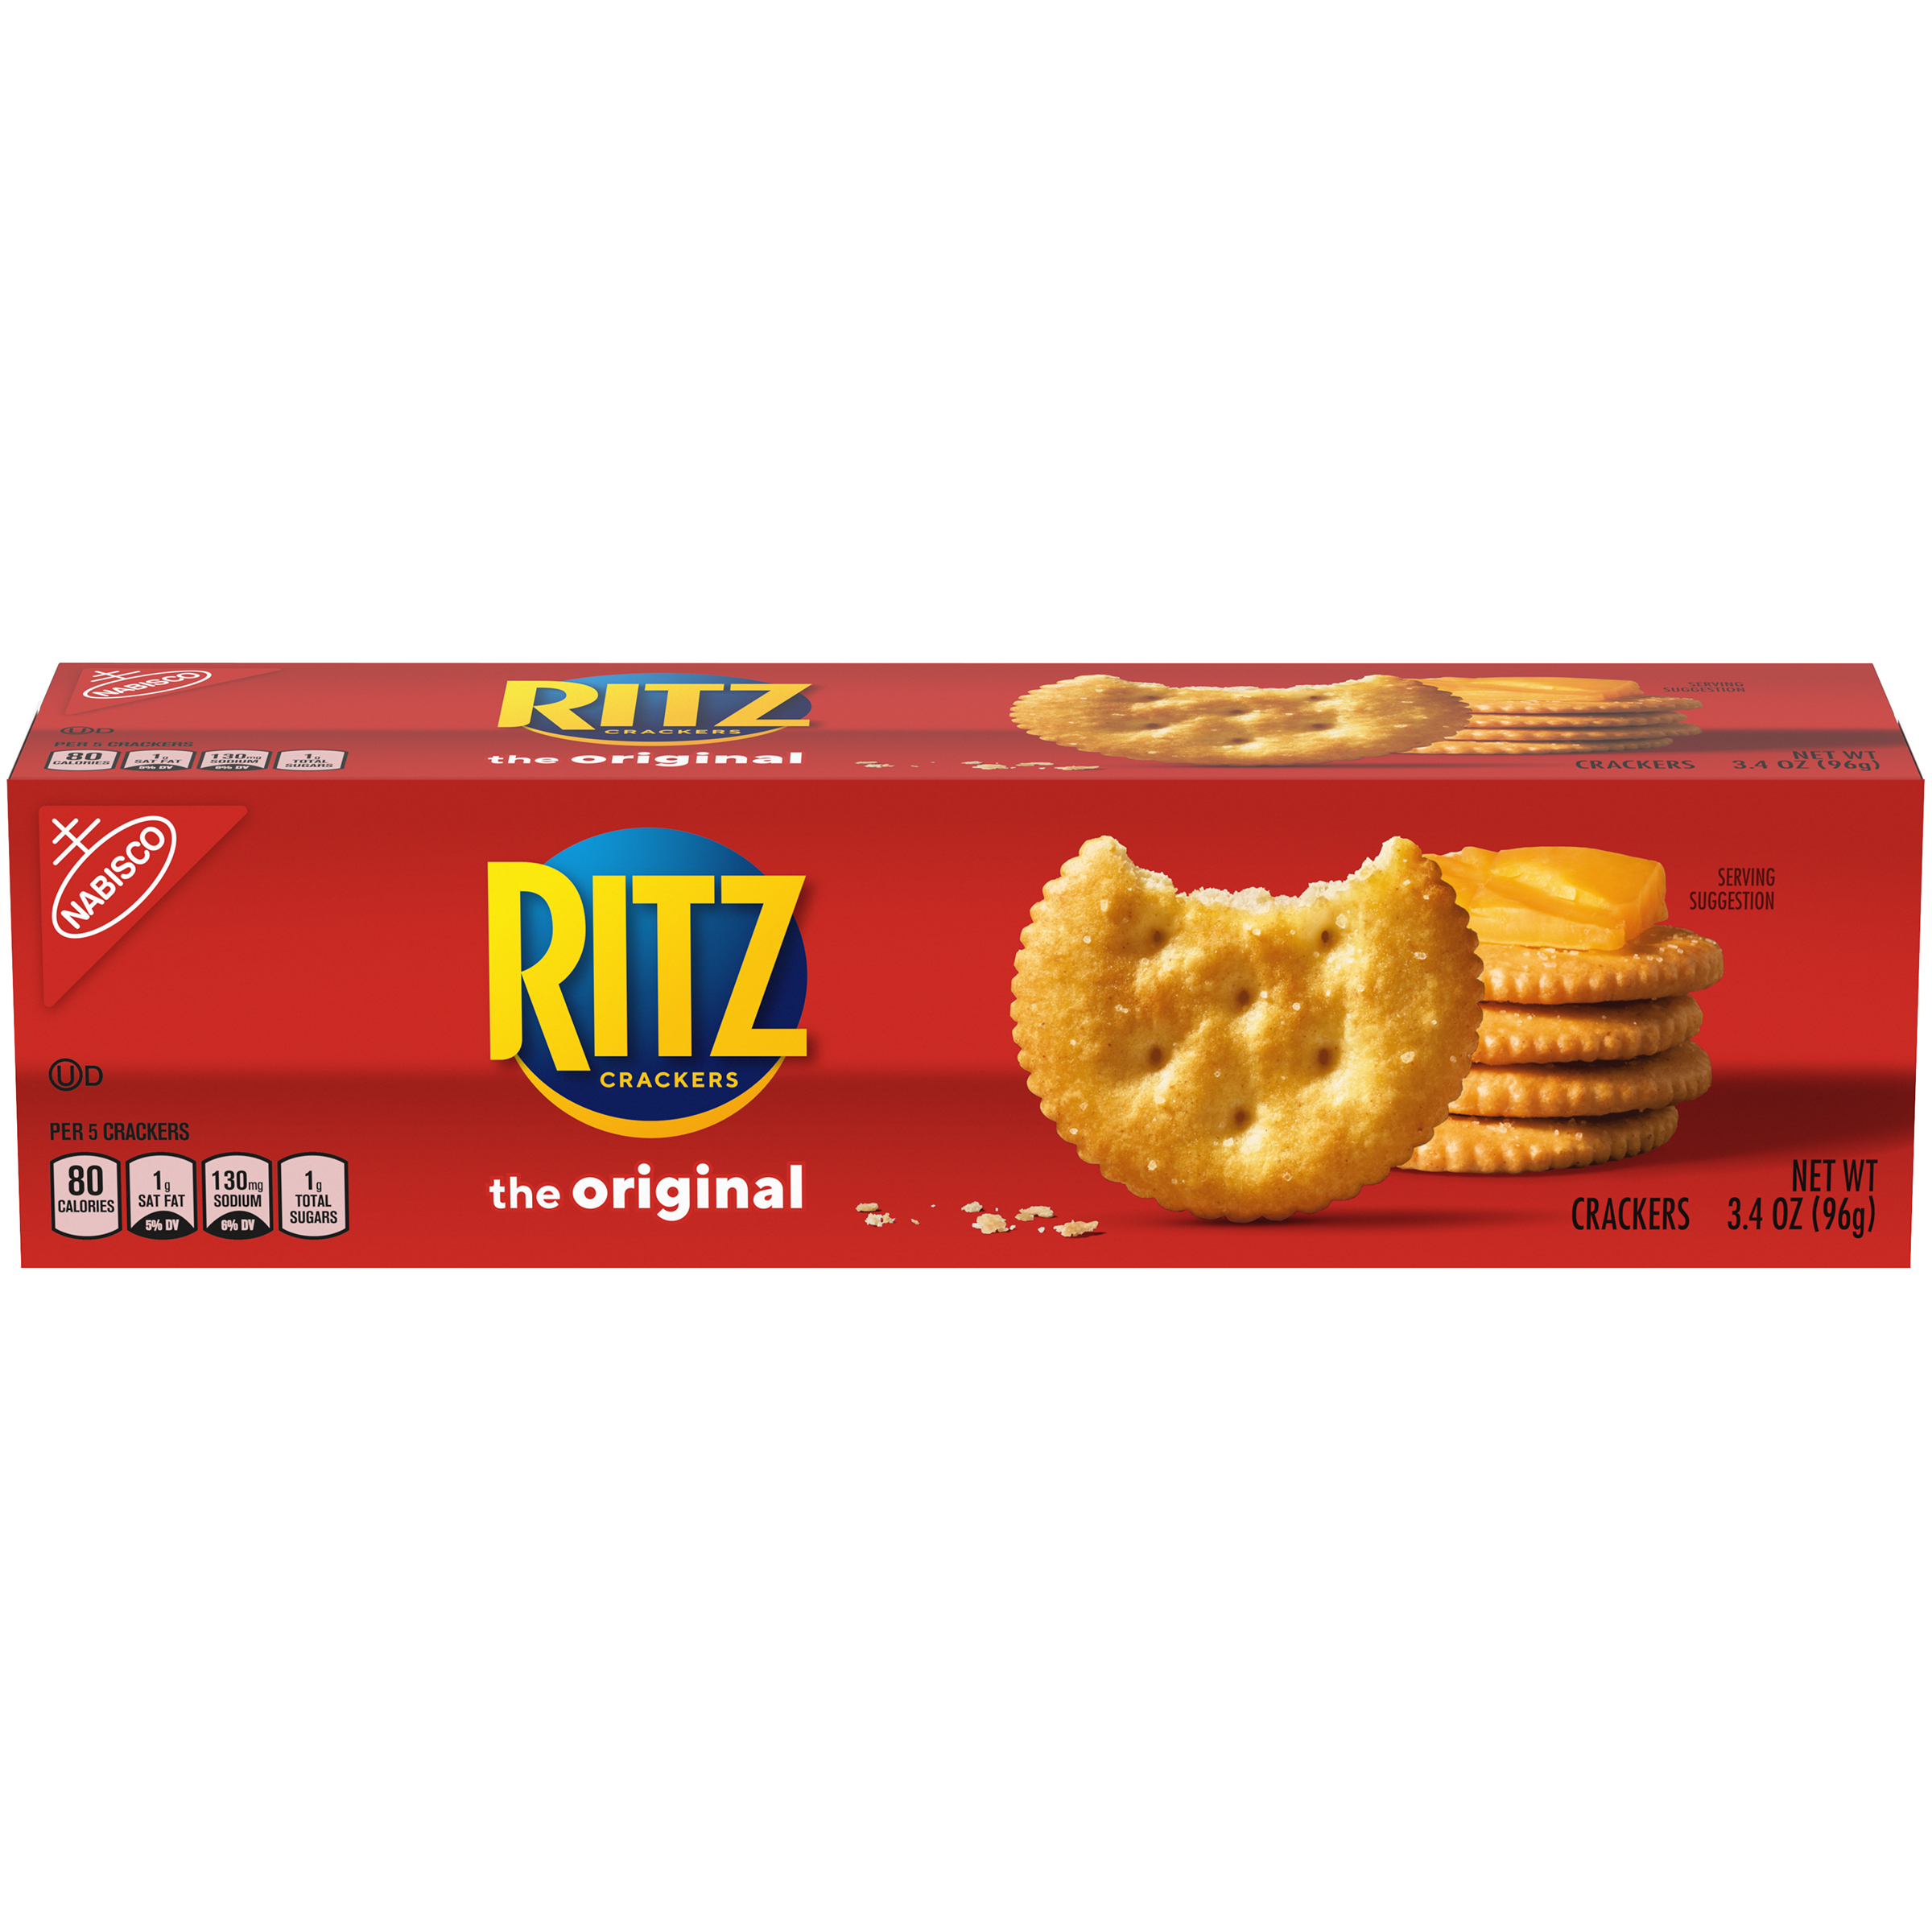 RITZ Crackers Convenience Pack 3.47OZ